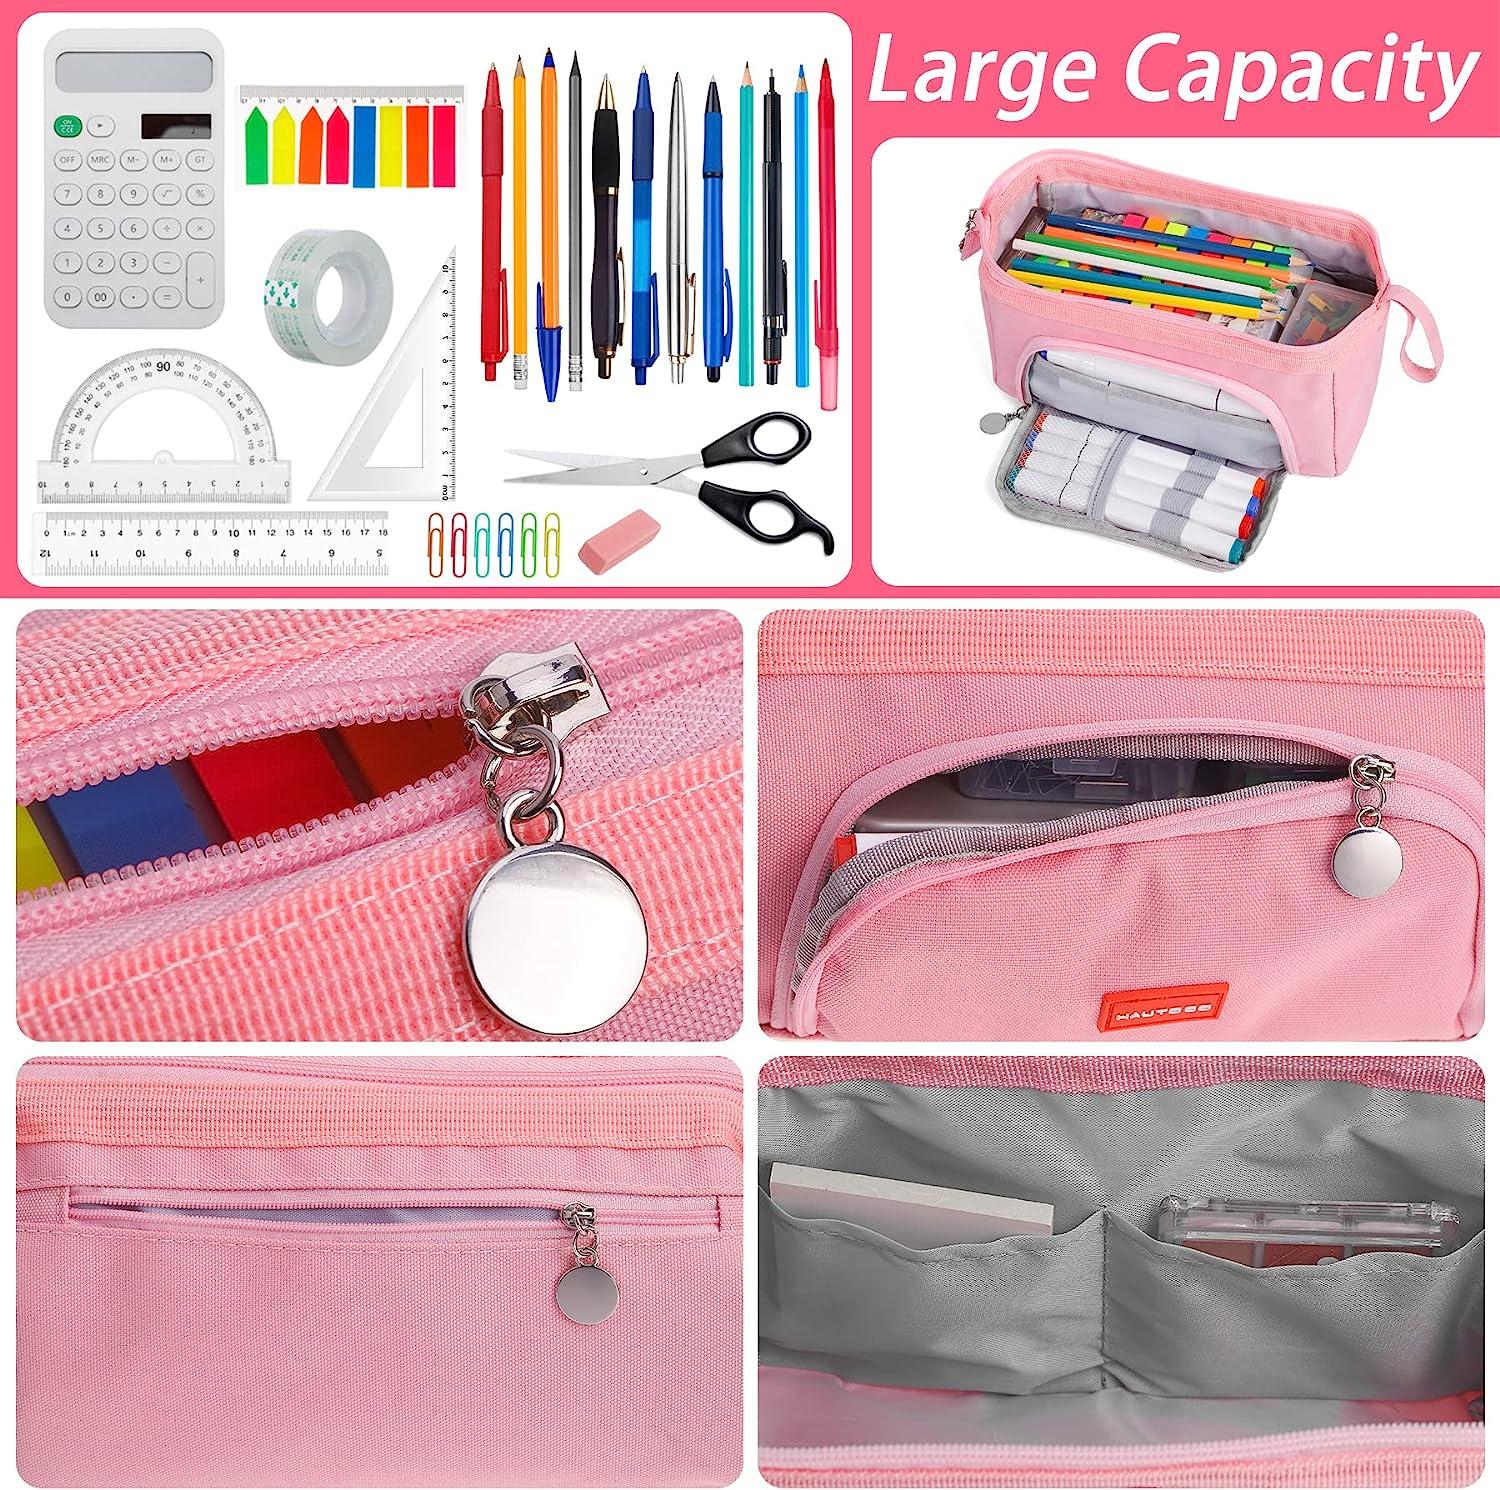 Ziloco pencil case big Retractable Pencil Case Stationery Storage Bag Cute  Pen Holder Bags pencil pouch,Black 